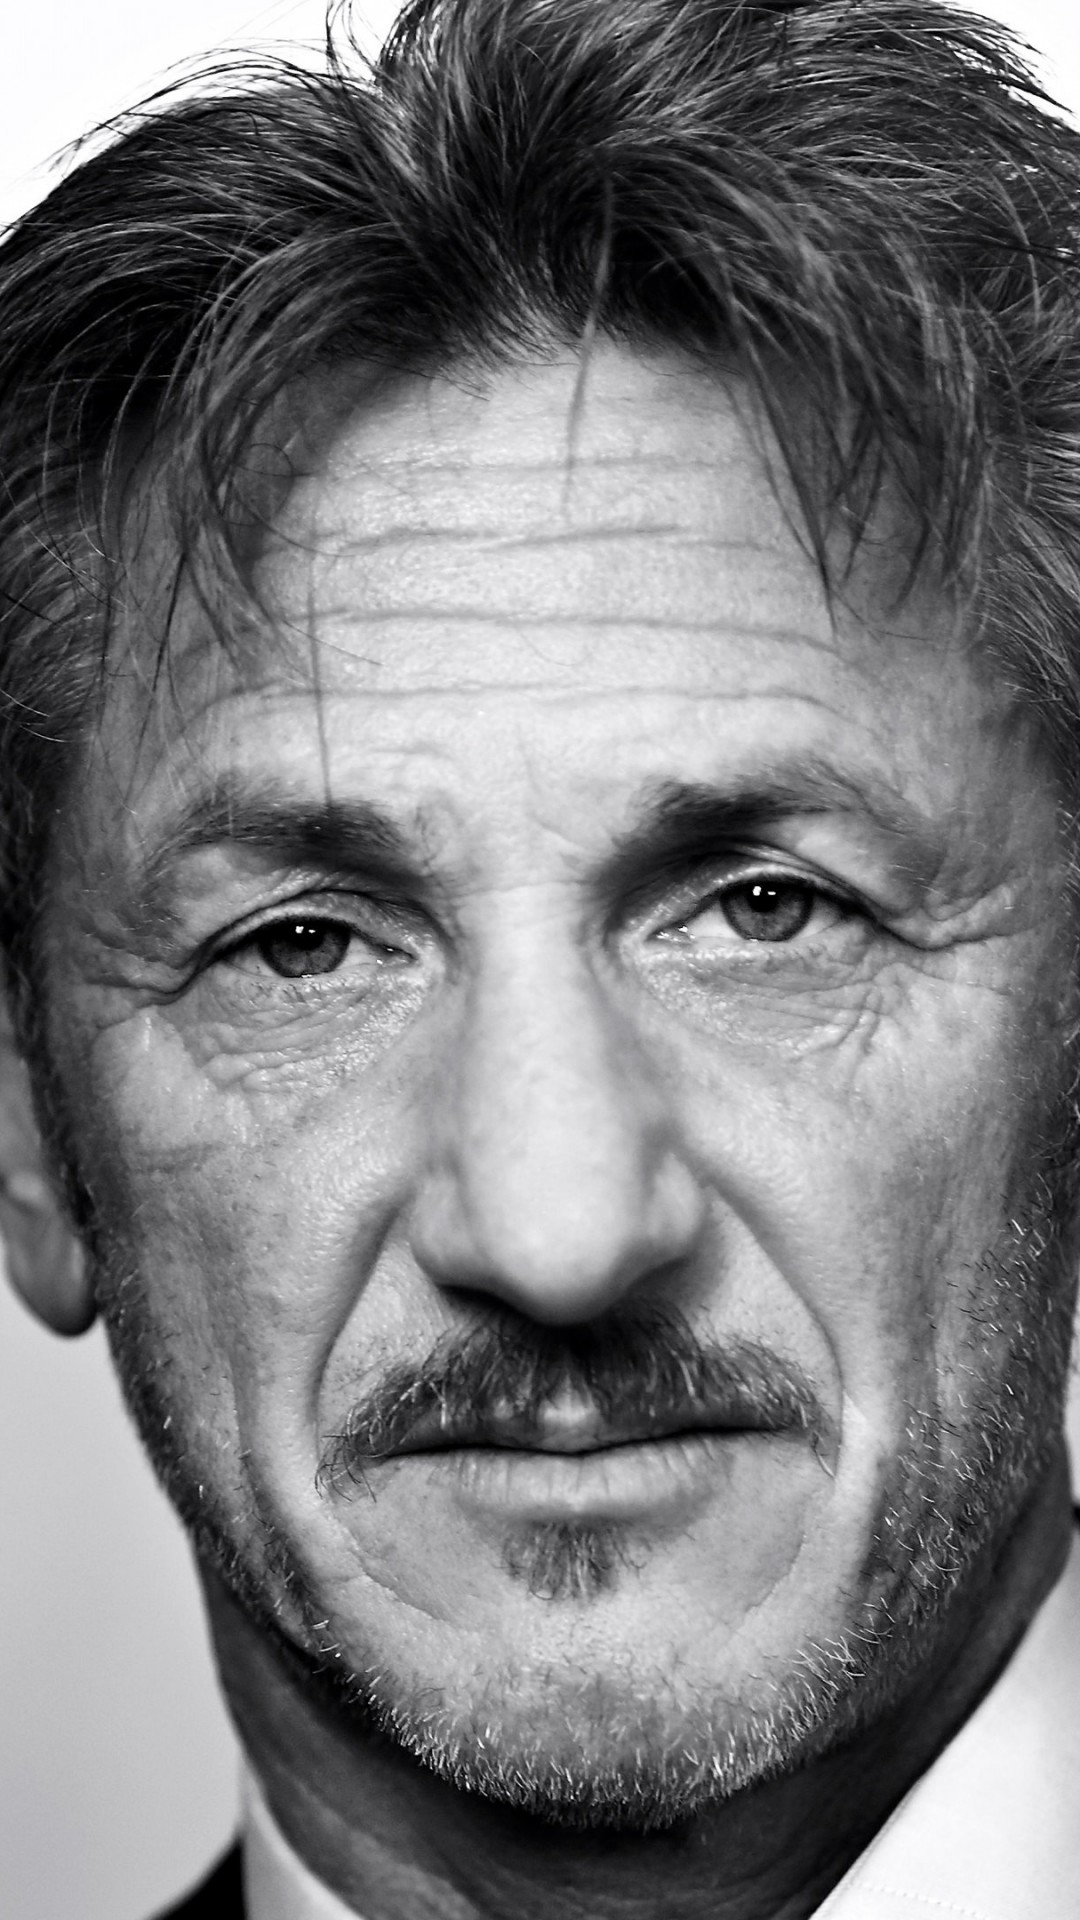 Sean Penn Portrait in Black & White Wallpaper for SAMSUNG Galaxy S4